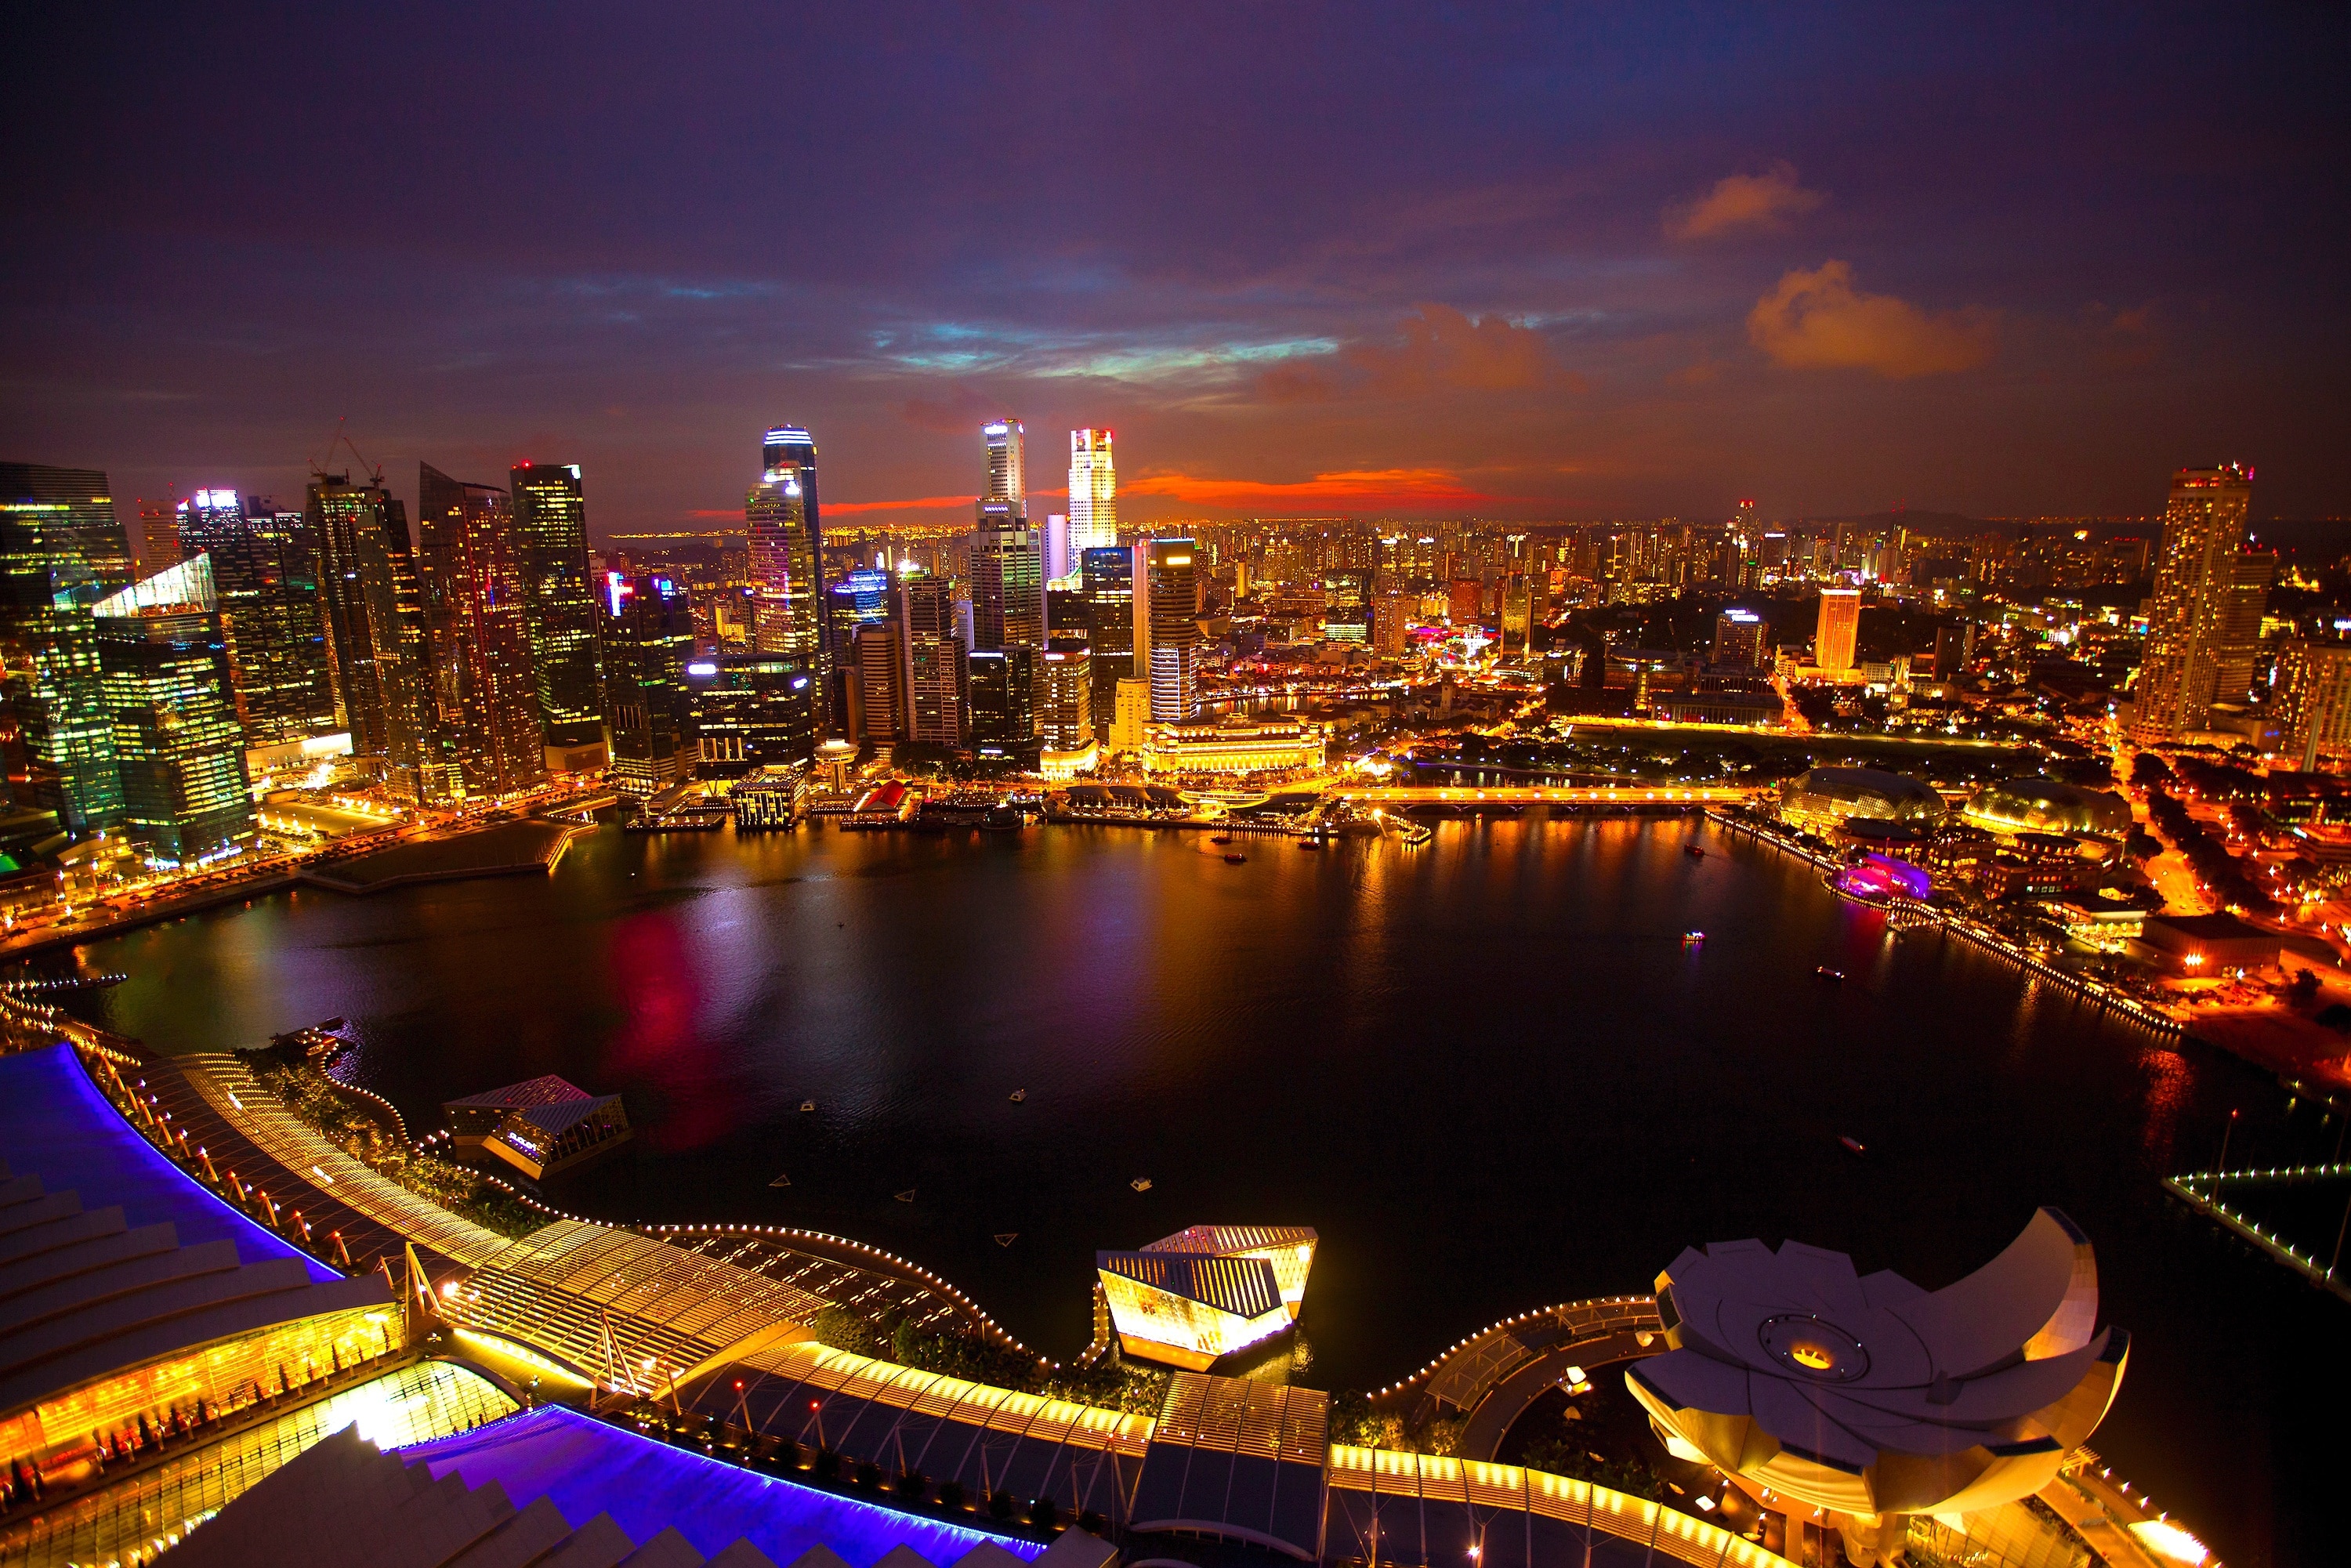 Marina Bay Sands Casino, Singapore, Singapore